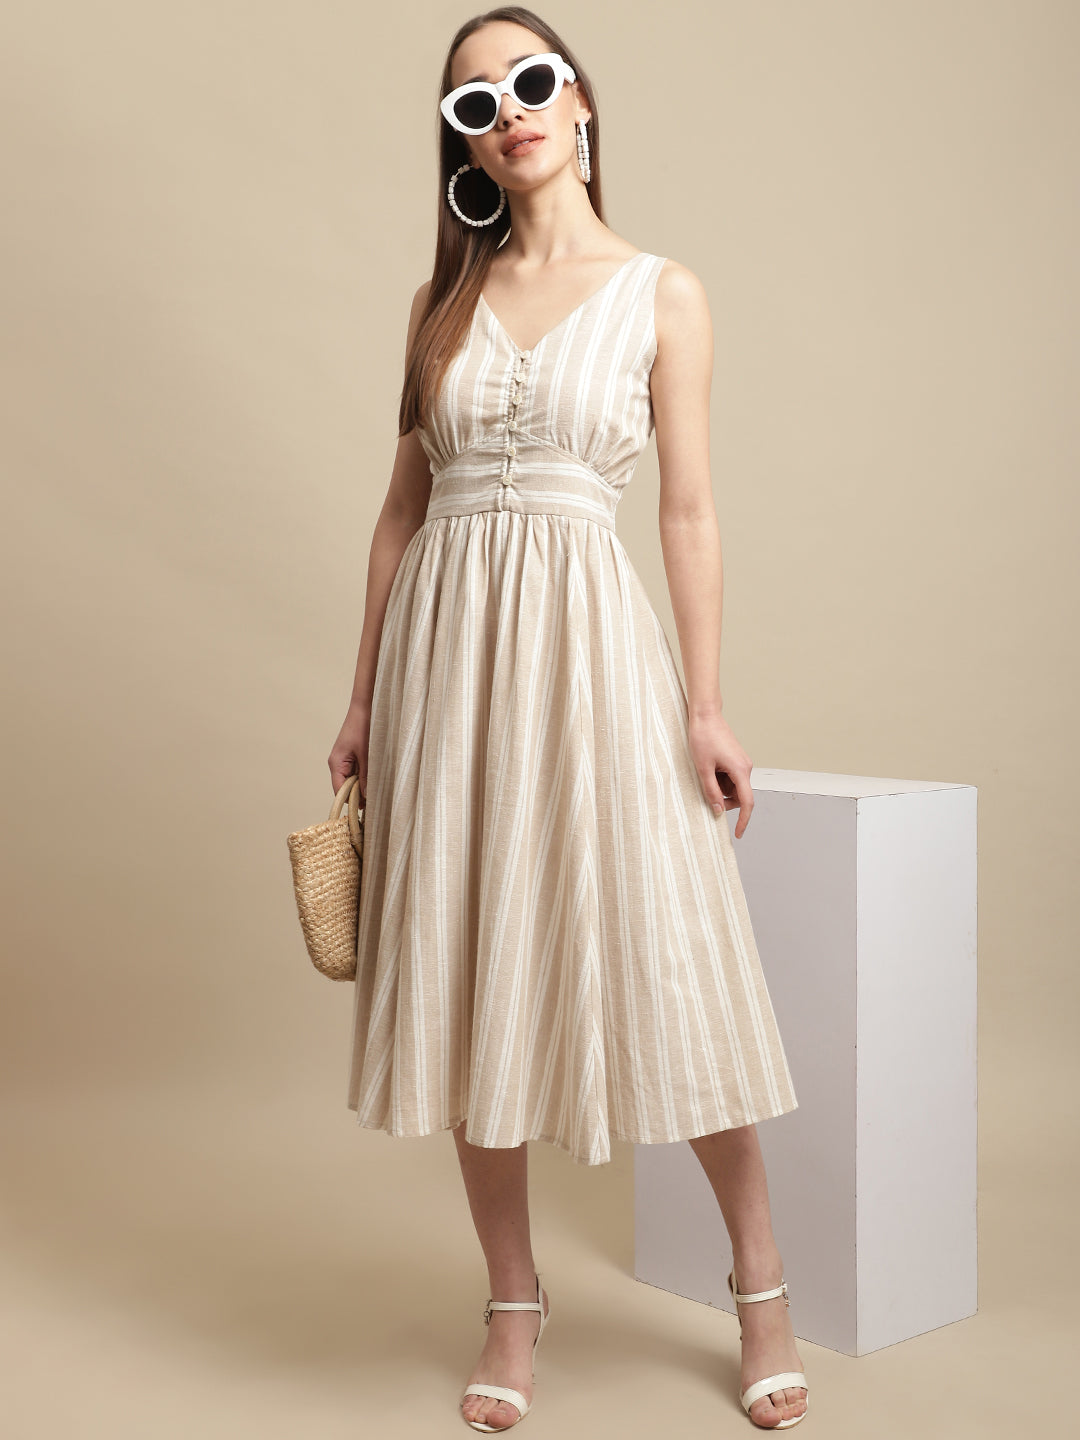 Beige With White Stripe Dress